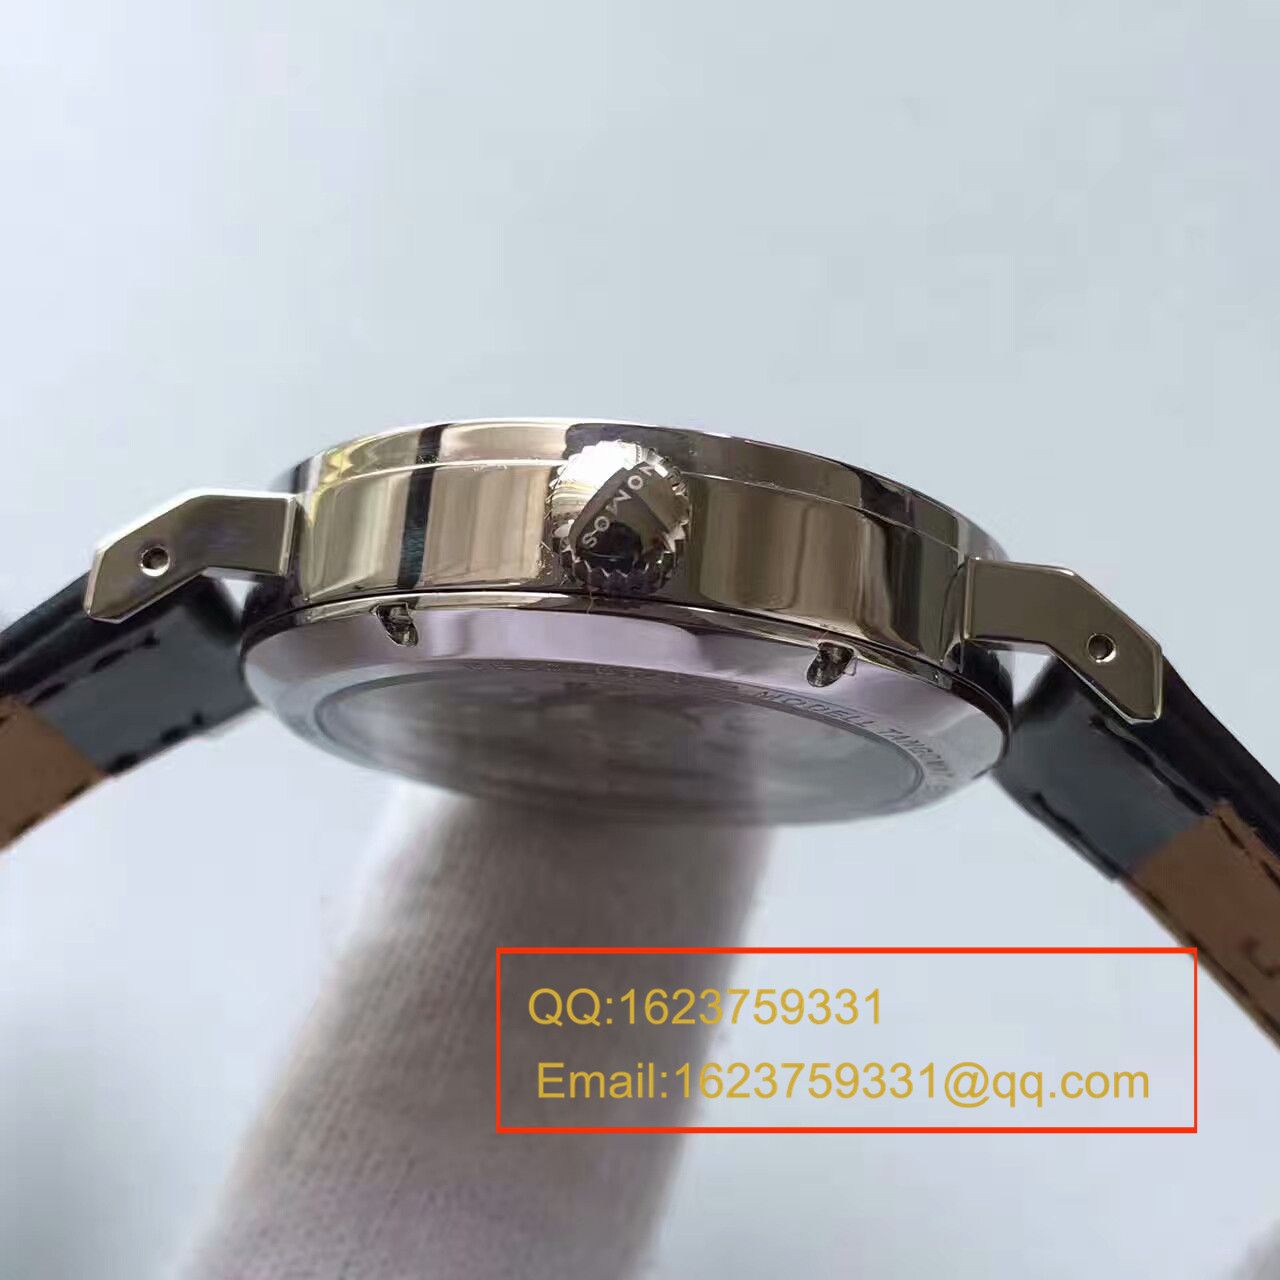 【OS厂1:1复刻手表】NOMOS诺莫斯 包豪斯TANGOMAT系列603腕表 / NO002